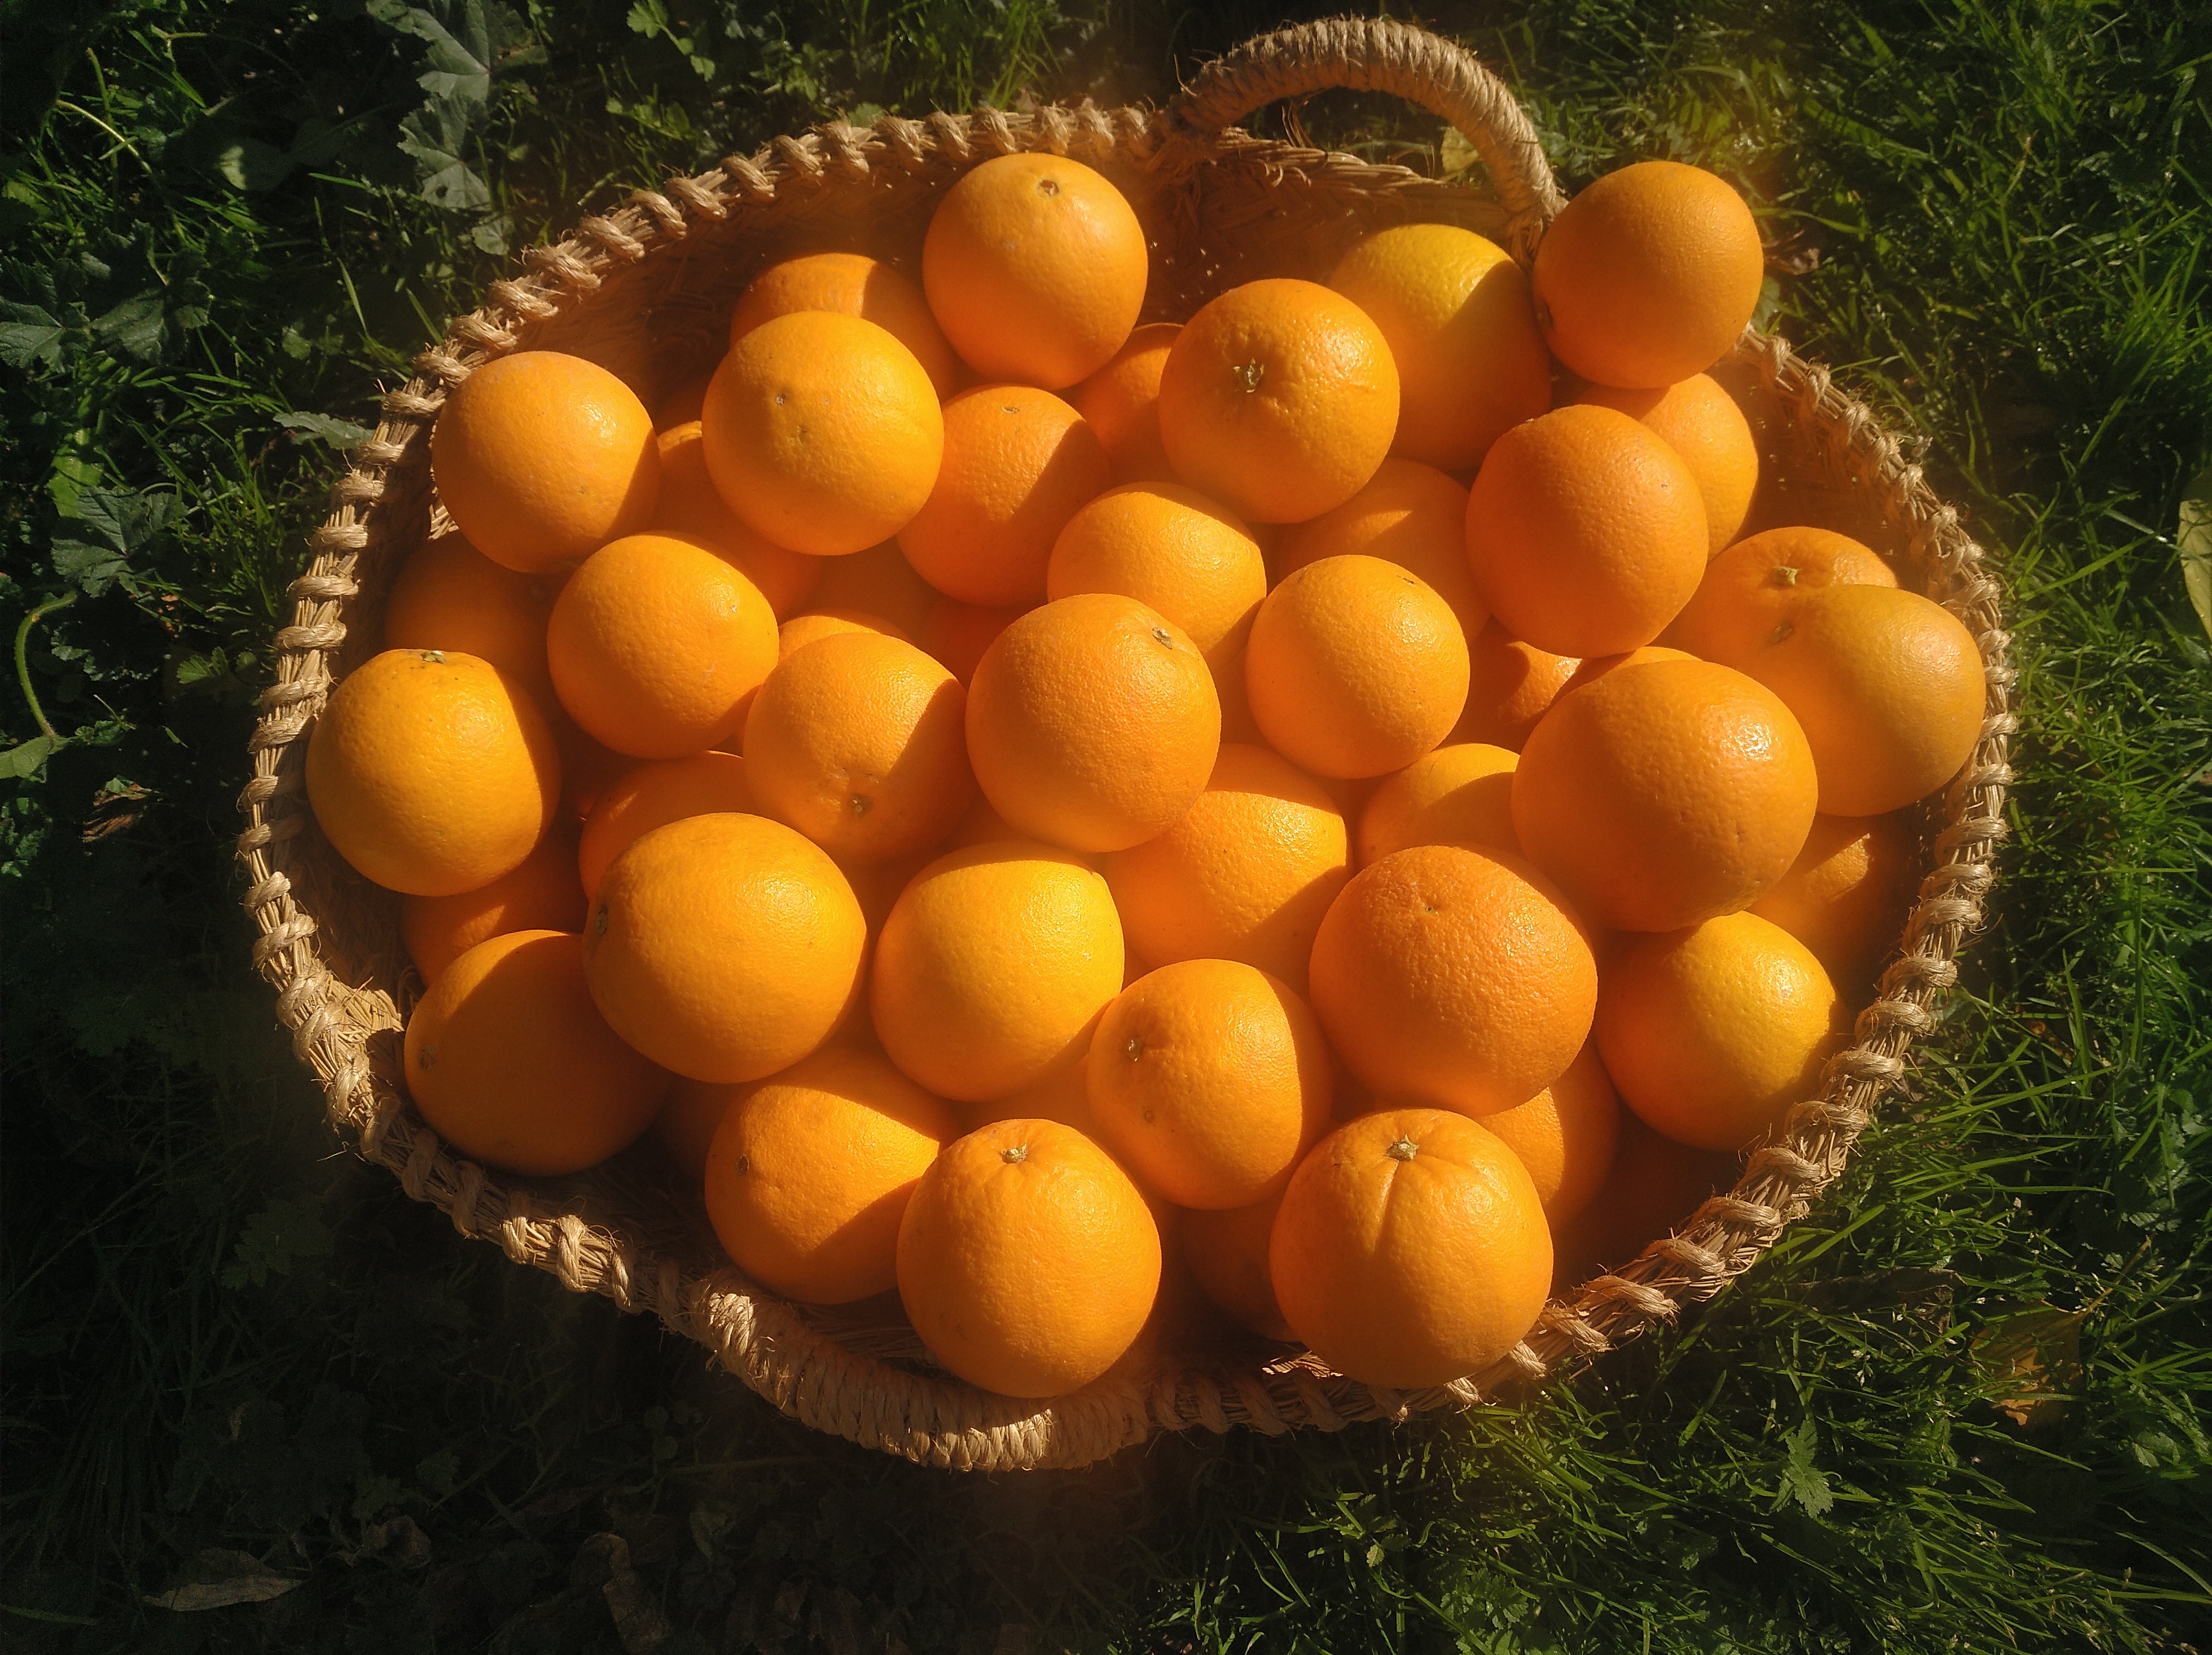 Naranjas navelinas valencianas de mesa (20Kg)